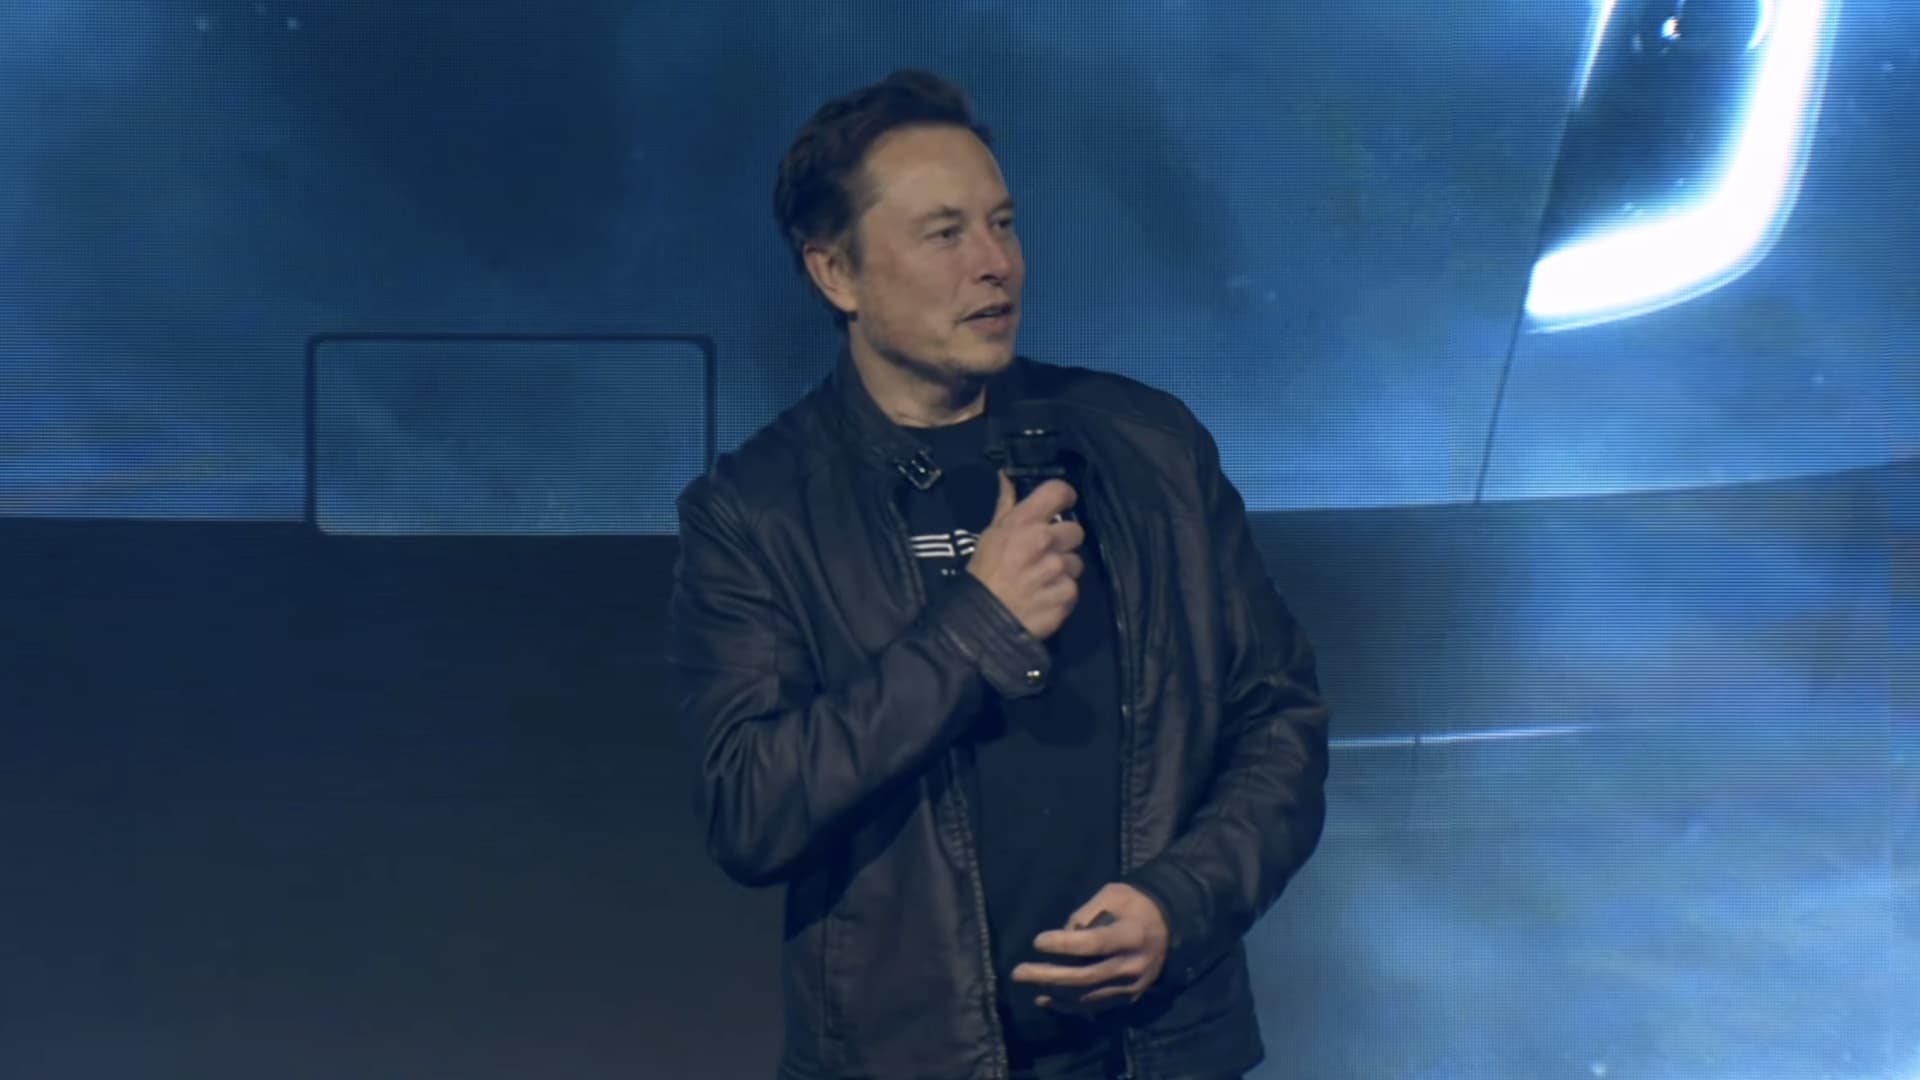 Tesla CEO Elon Musk kicks off first Semi truck deliveries - CNBC